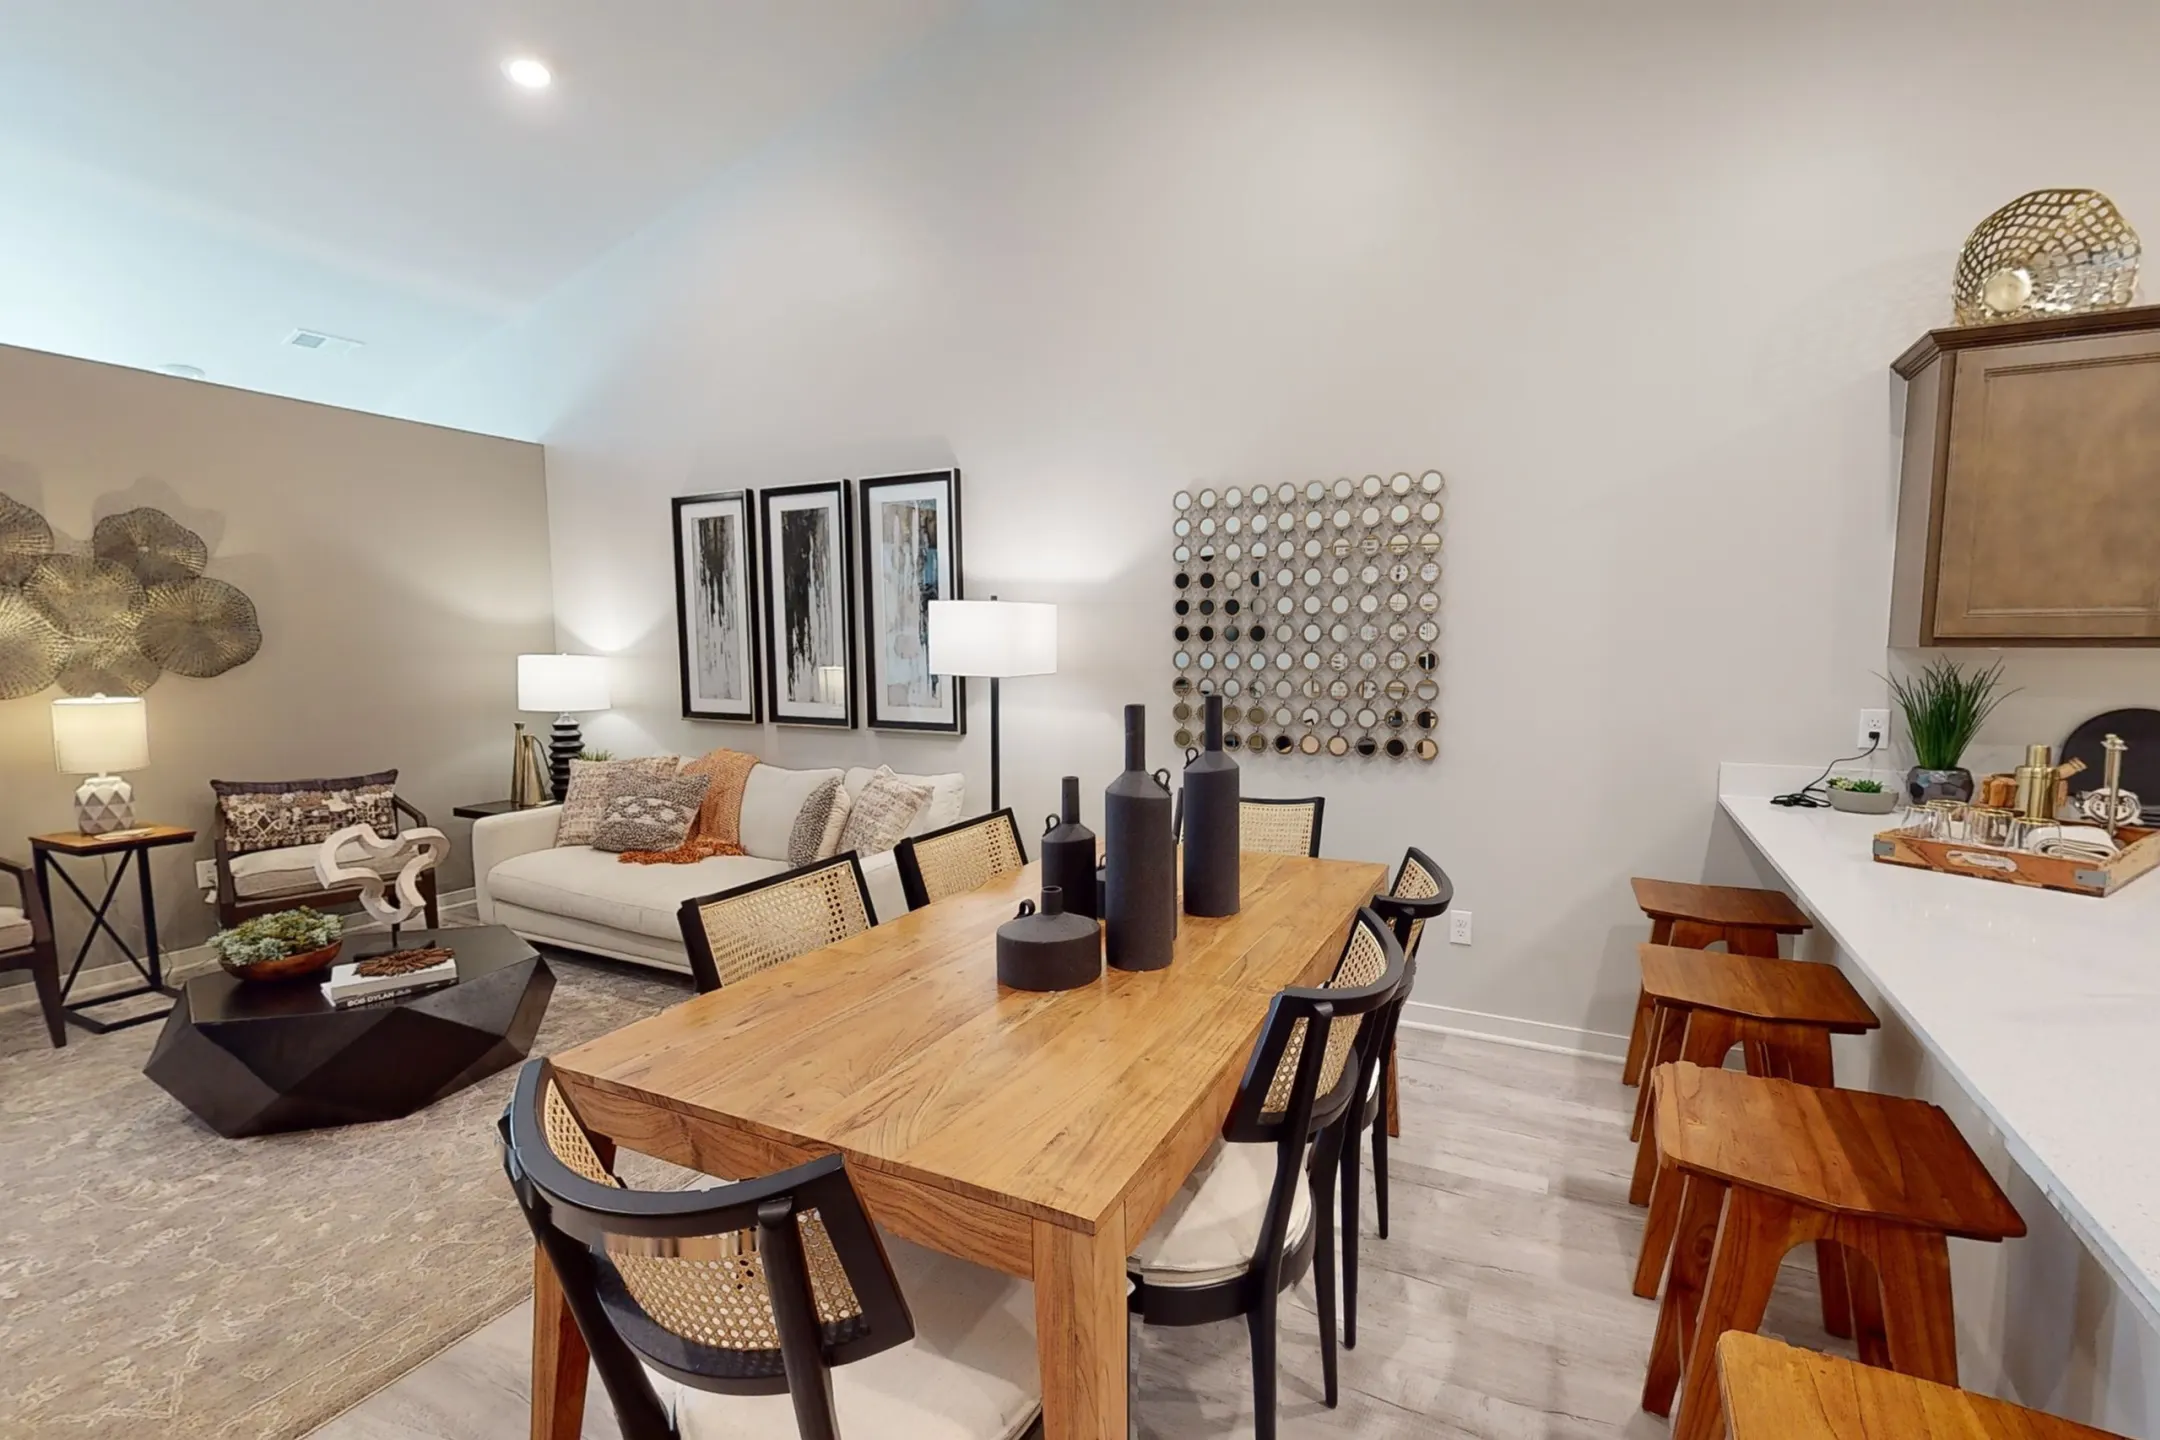 Dining Room - Insignia Apartments - Clarkston, MI